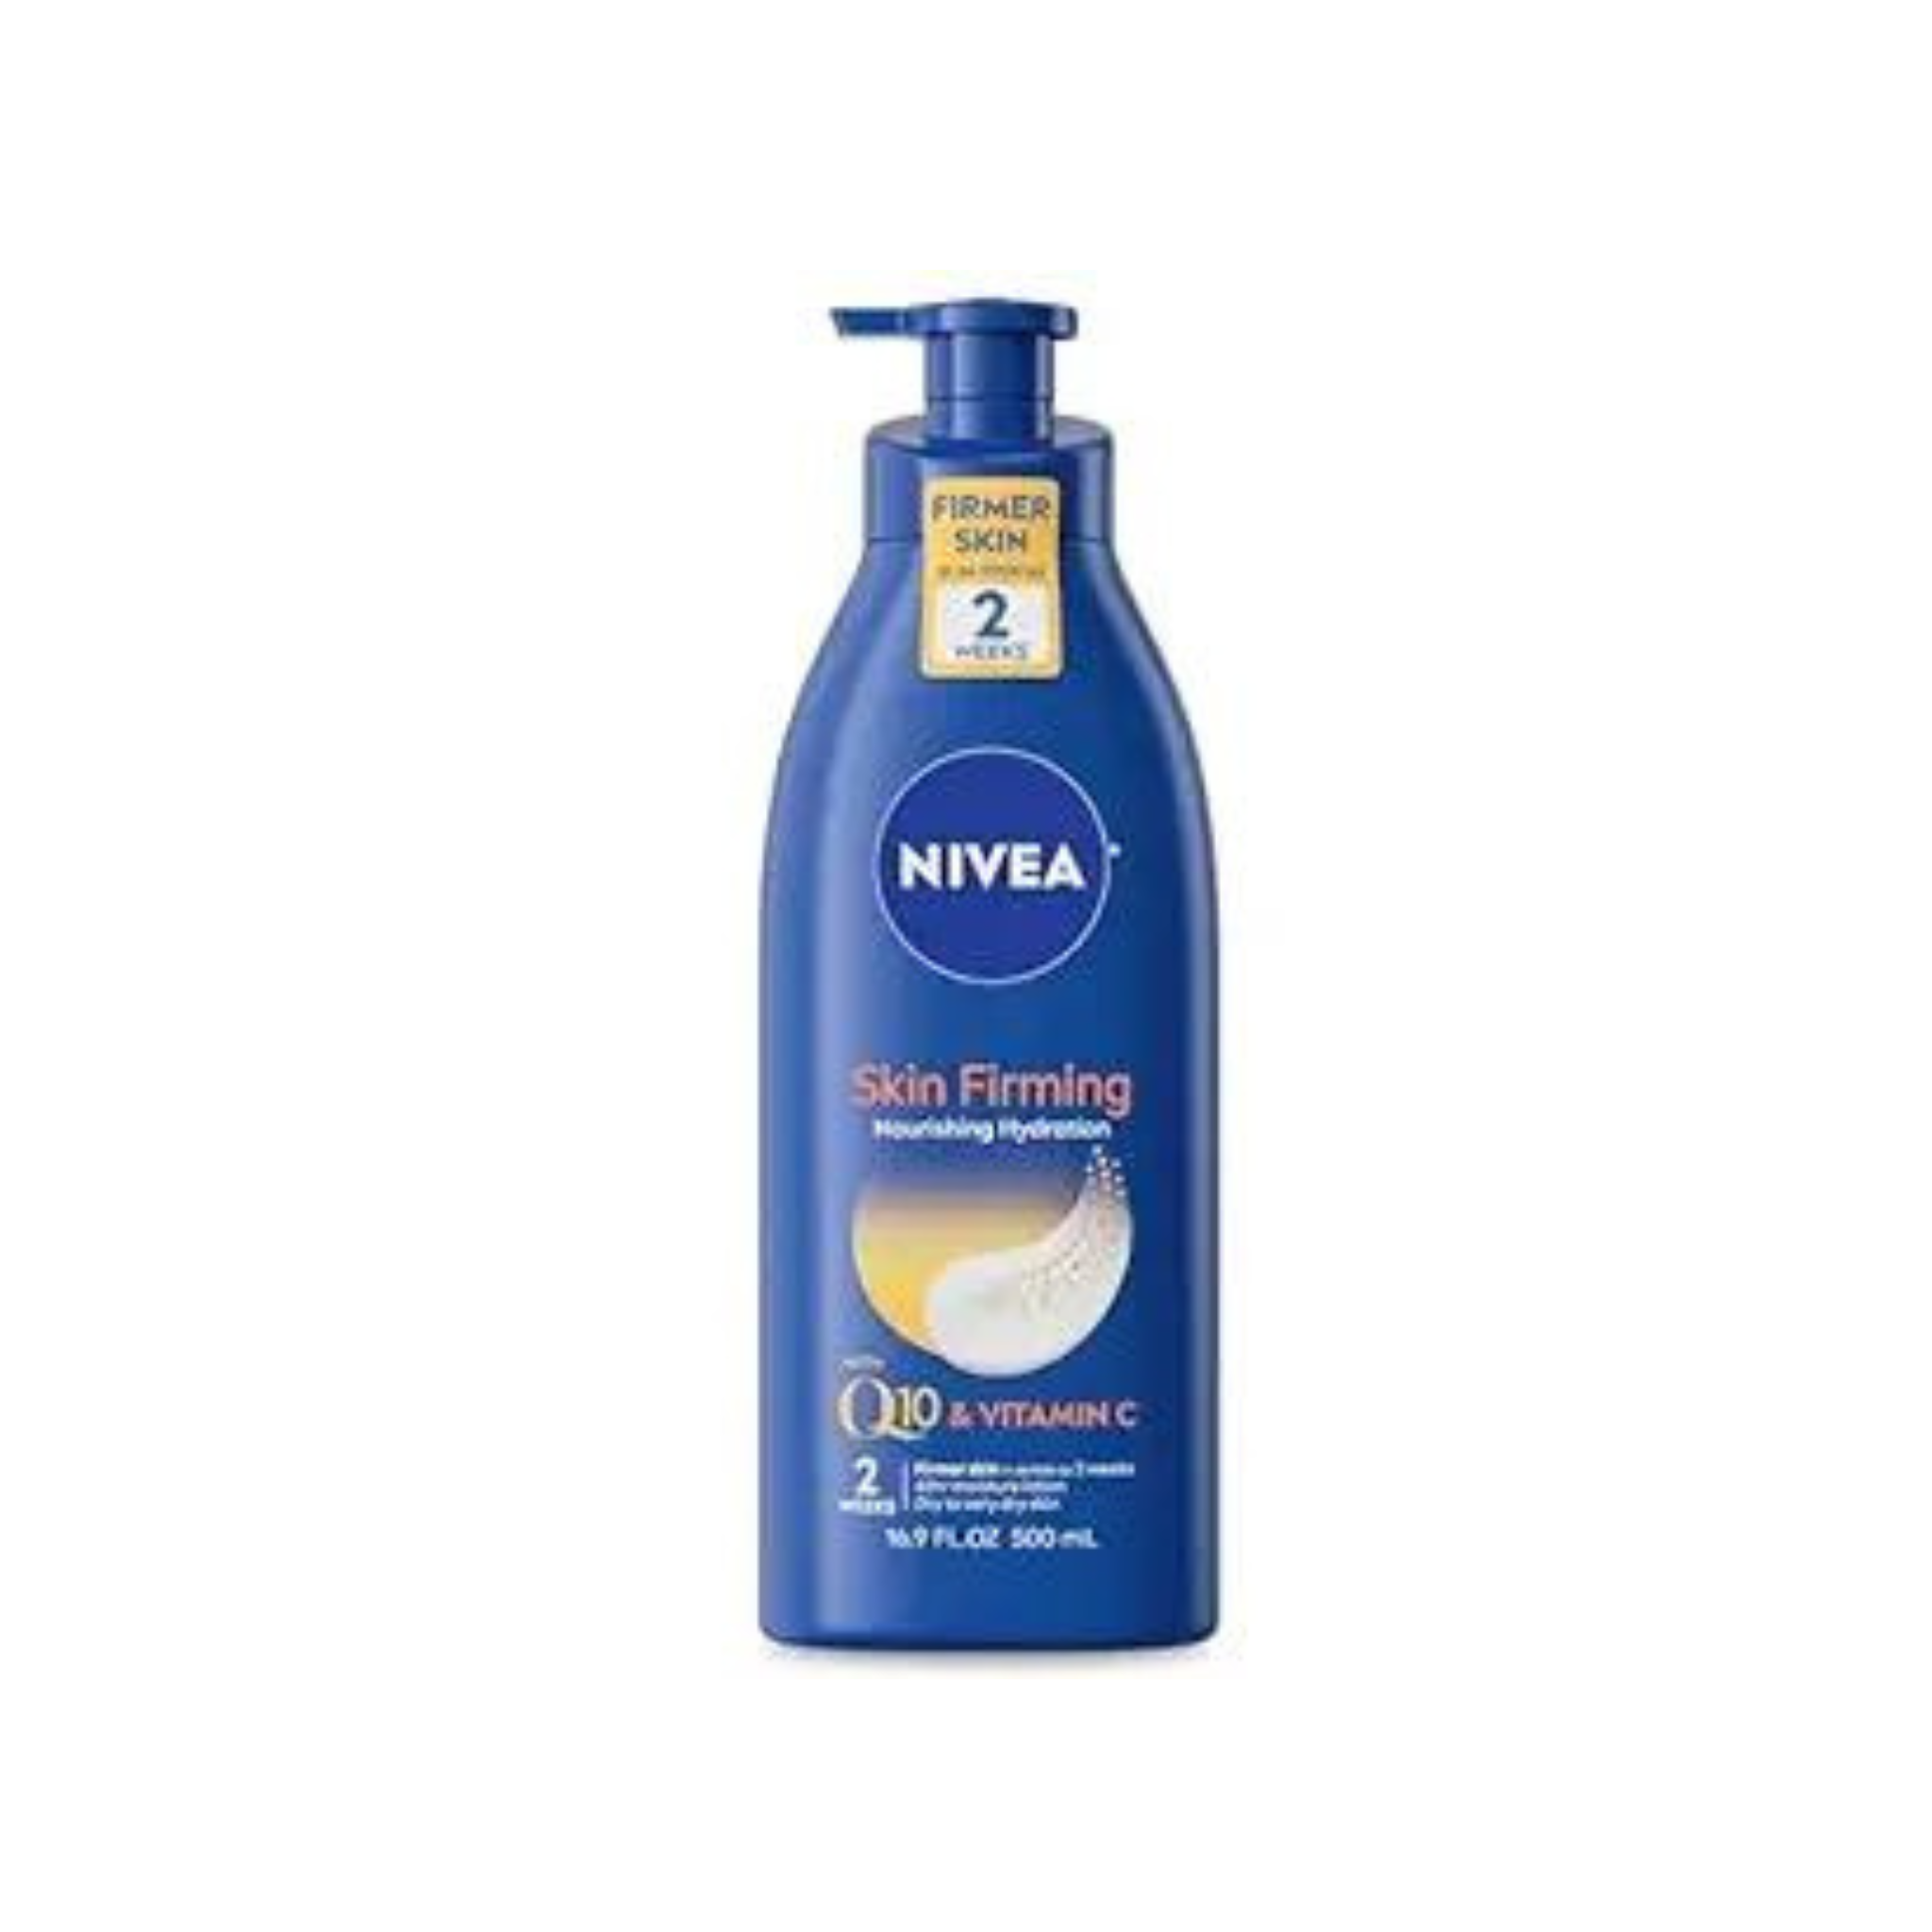 3 Bottles of NIVEA Nourishing Skin Firming Body Lotion with Q10 and Vitamin C (16.9 Fl Oz Pump Bottles)